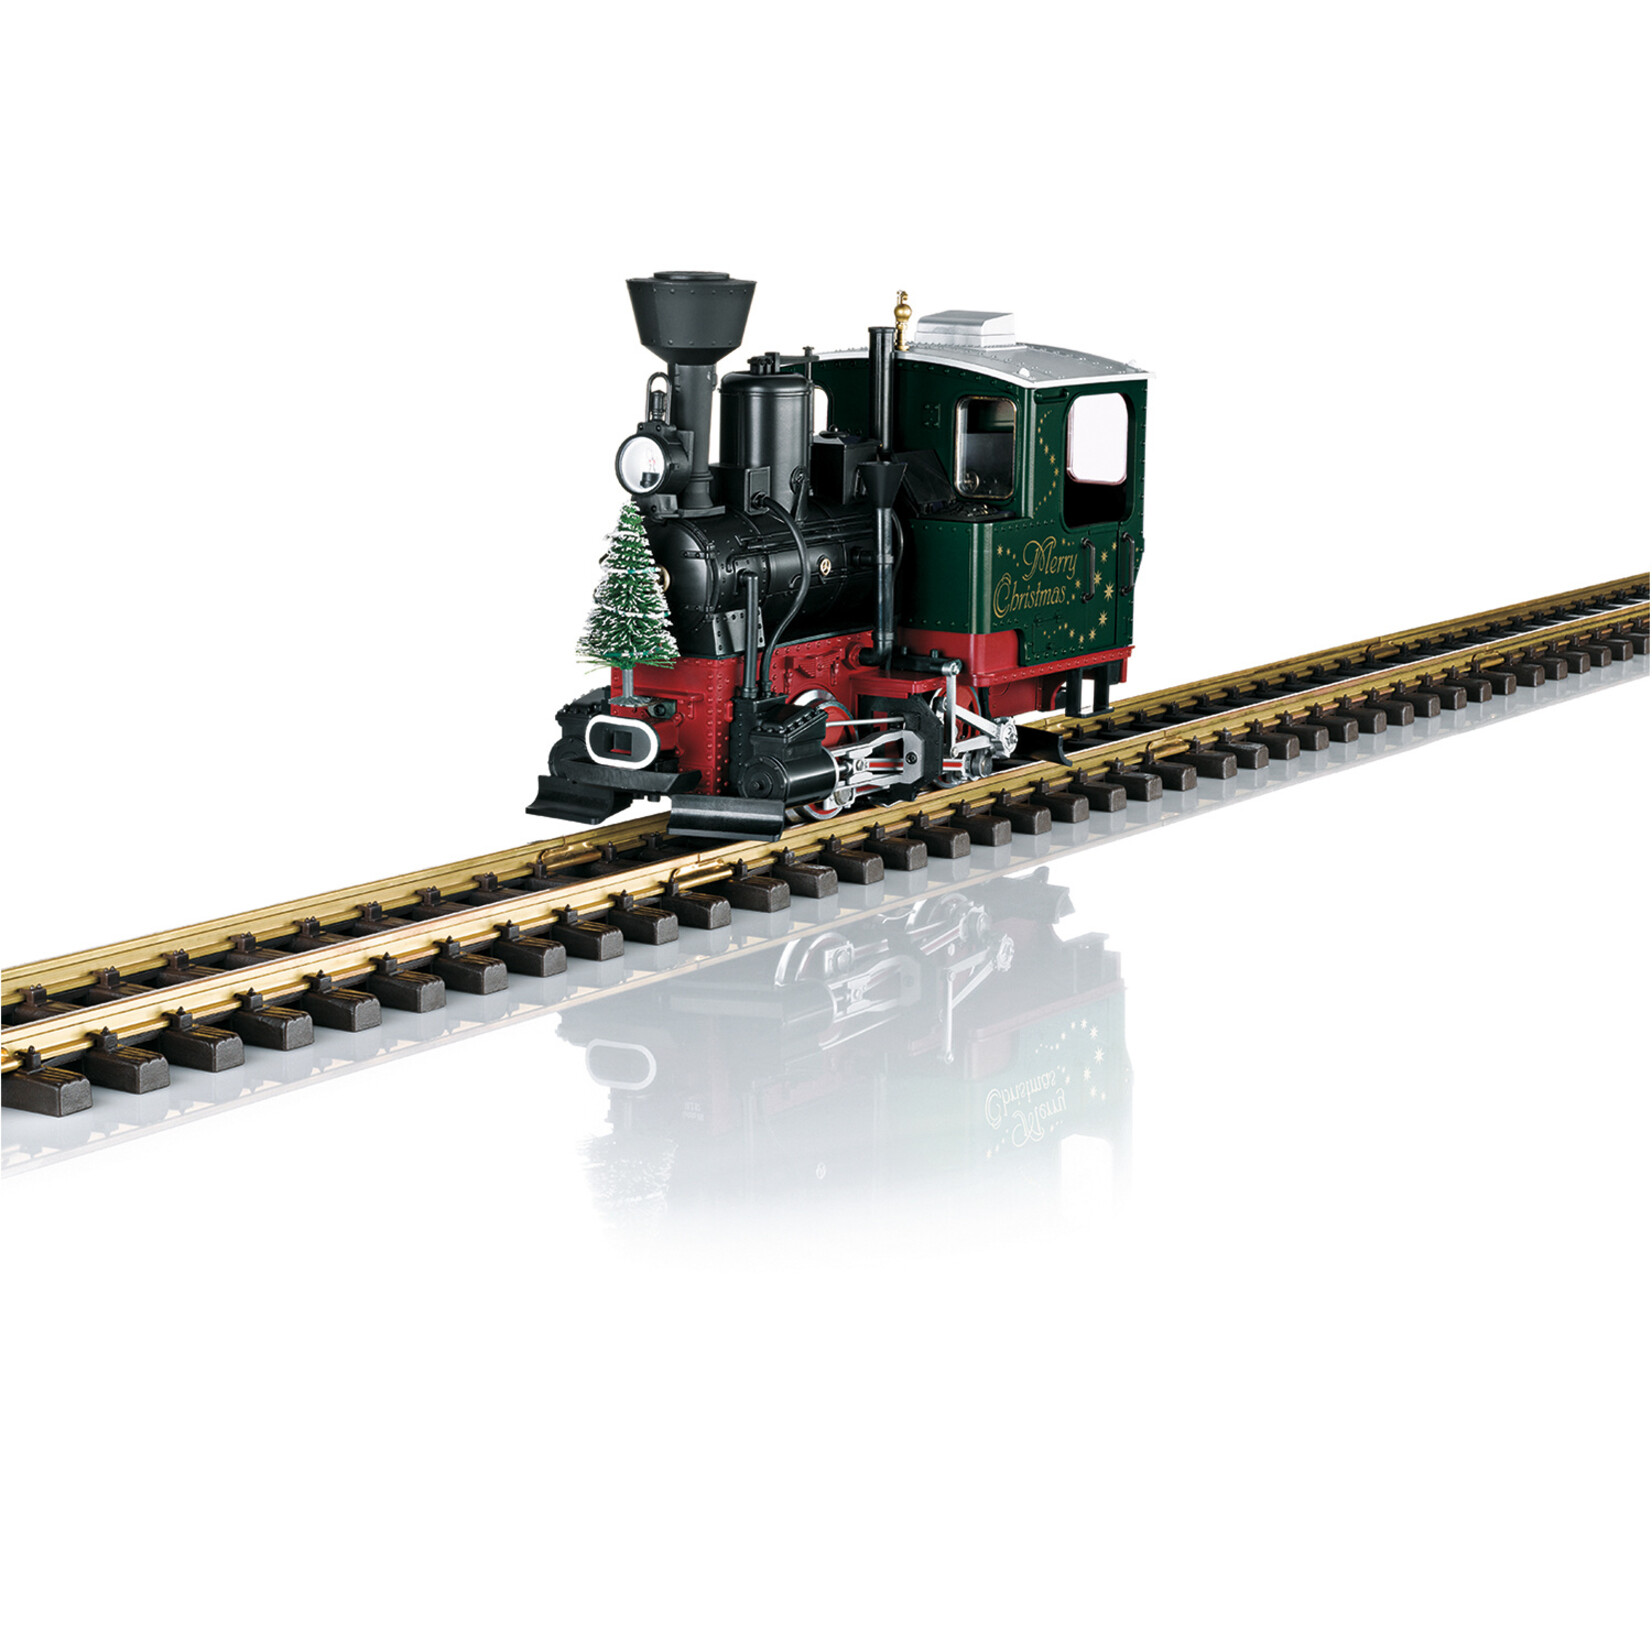 LGB LGB 20215 Christmas Steam Locomotive - RERUN